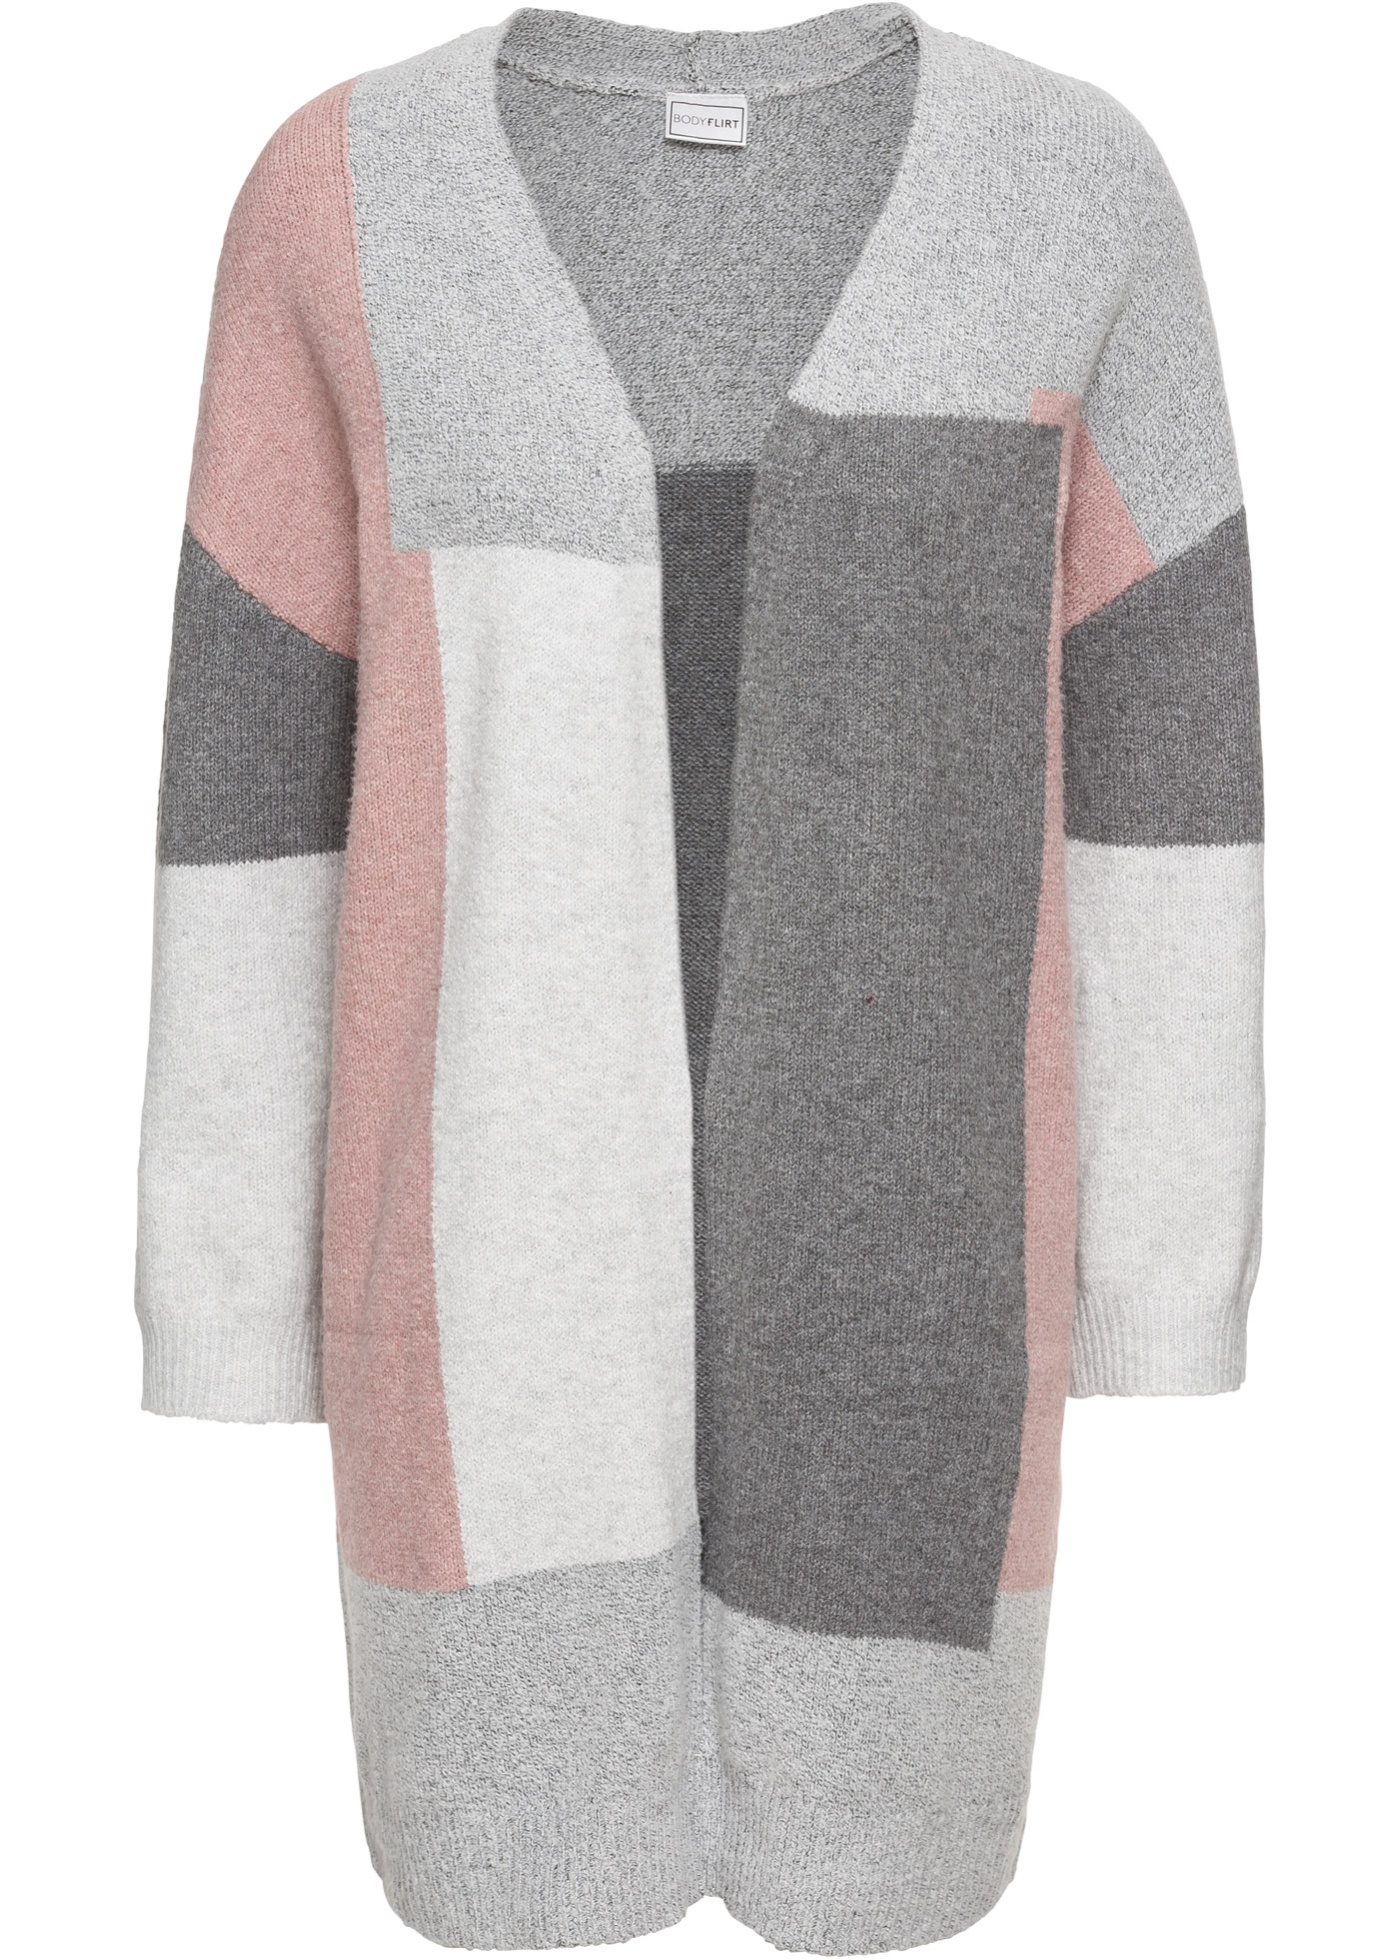 Dlhý sveter, colorblocking dizajn